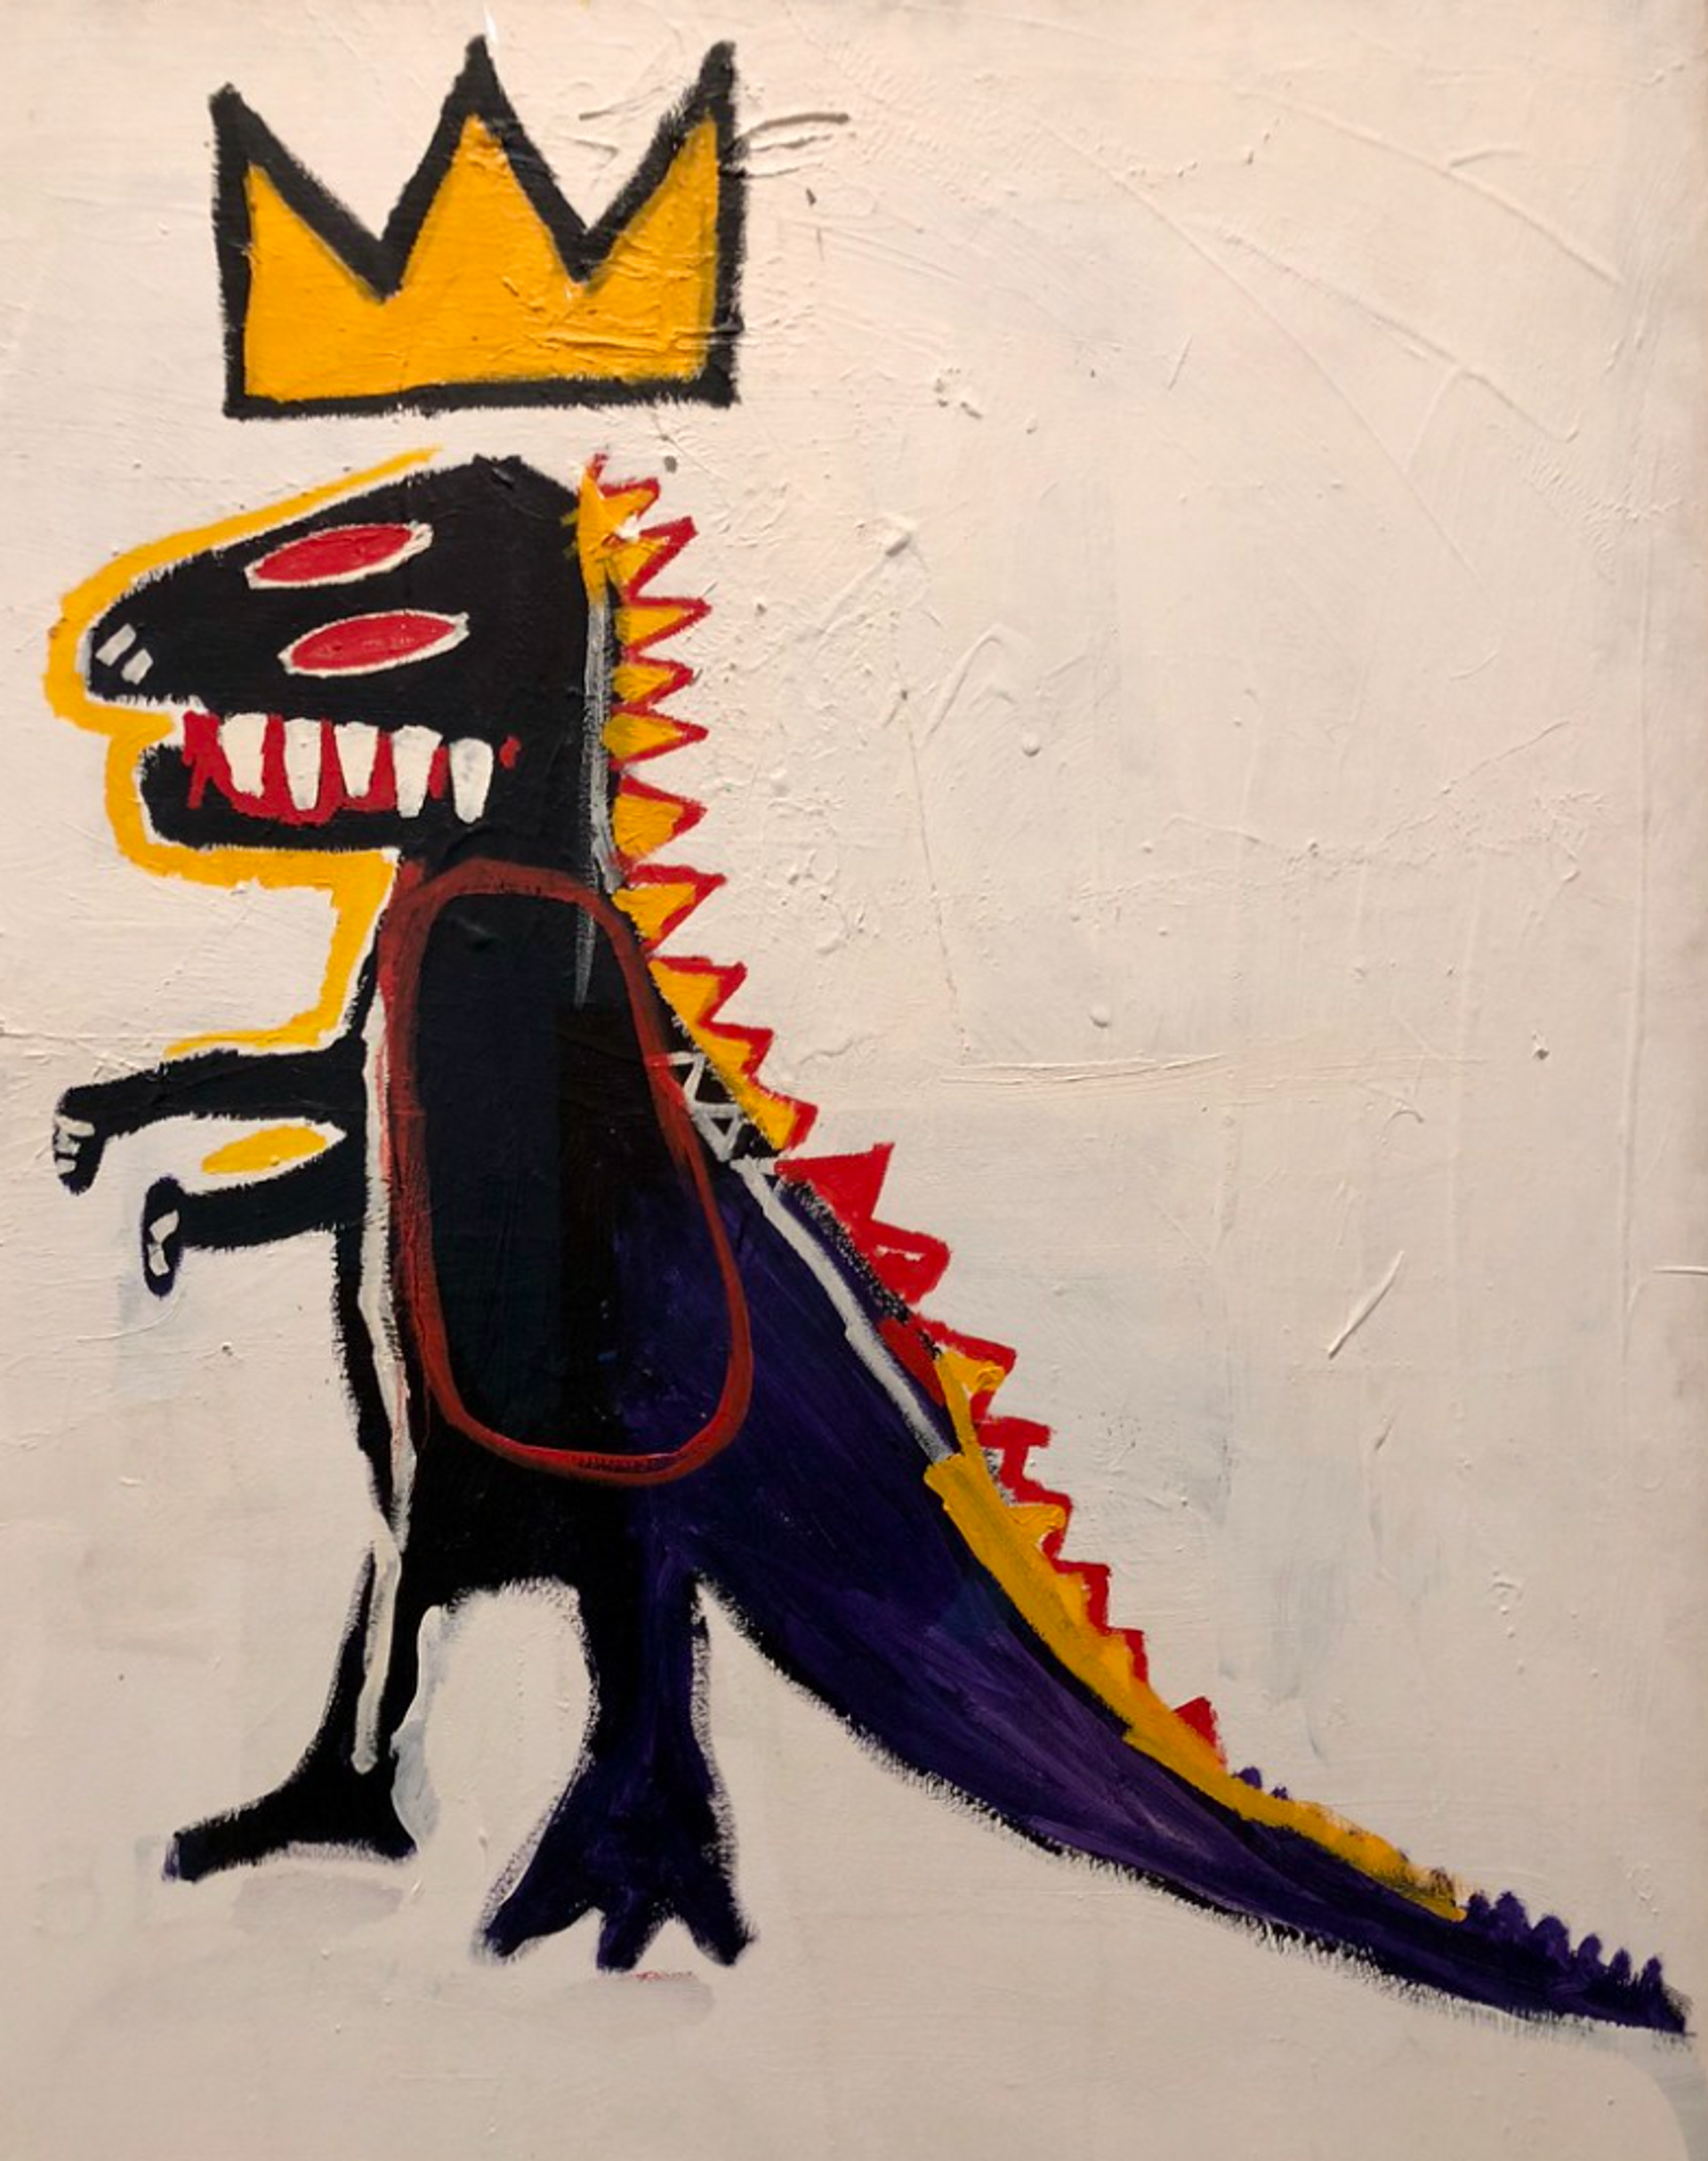 Pez Dispenser by Jean-Michel Basquiat